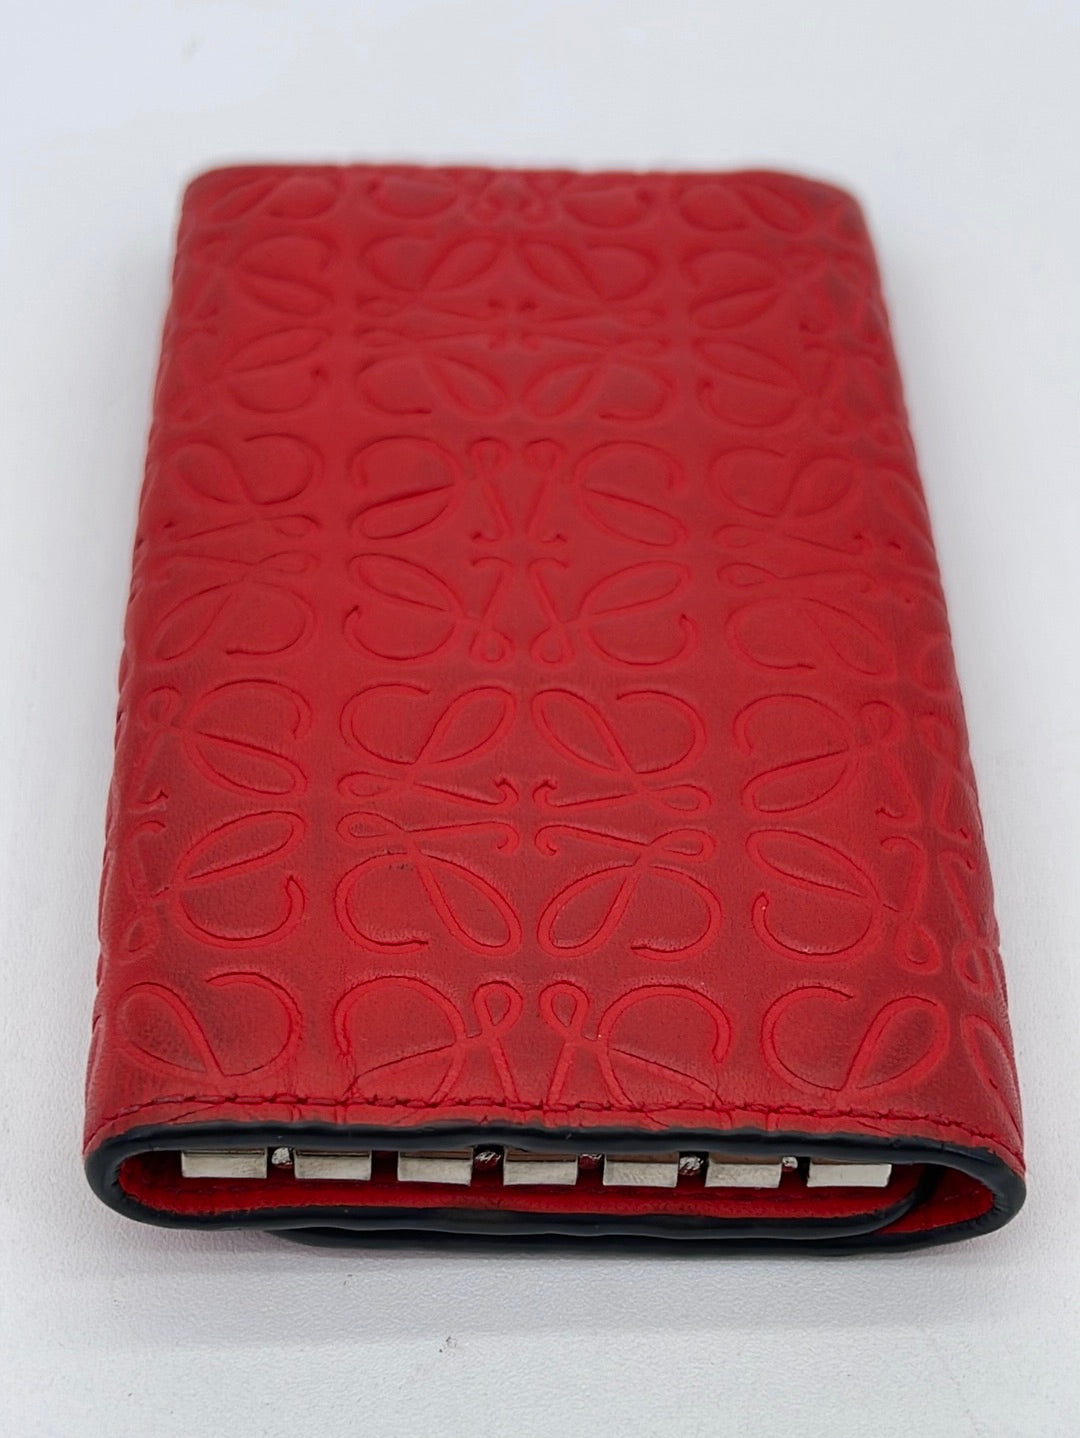 PRELOVED Loewe Red Leather 6 Key Holder 411711 060923 $40 OFF